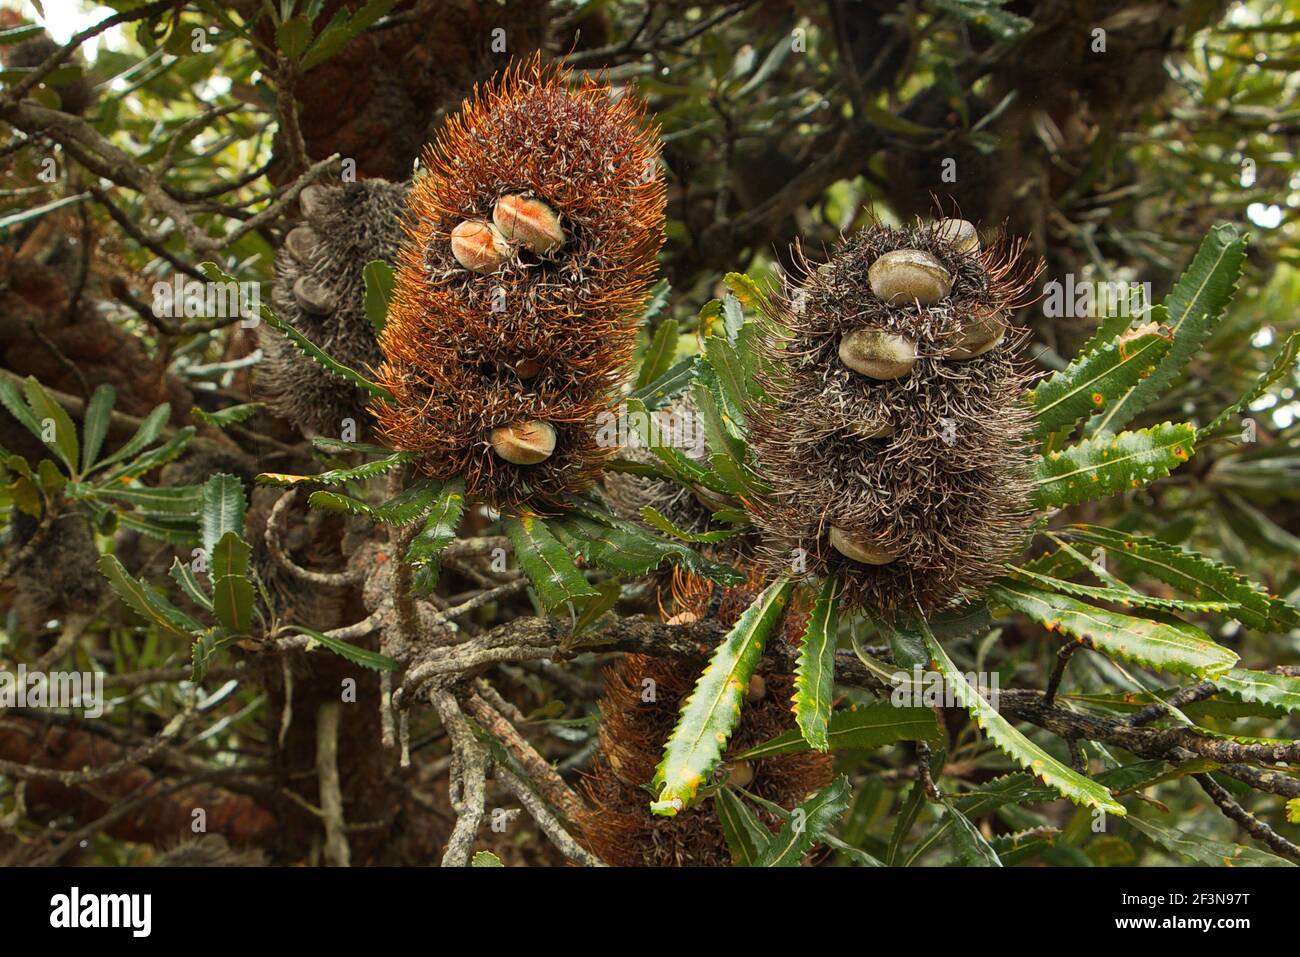 Banksia Tree in Australia Stock Photo